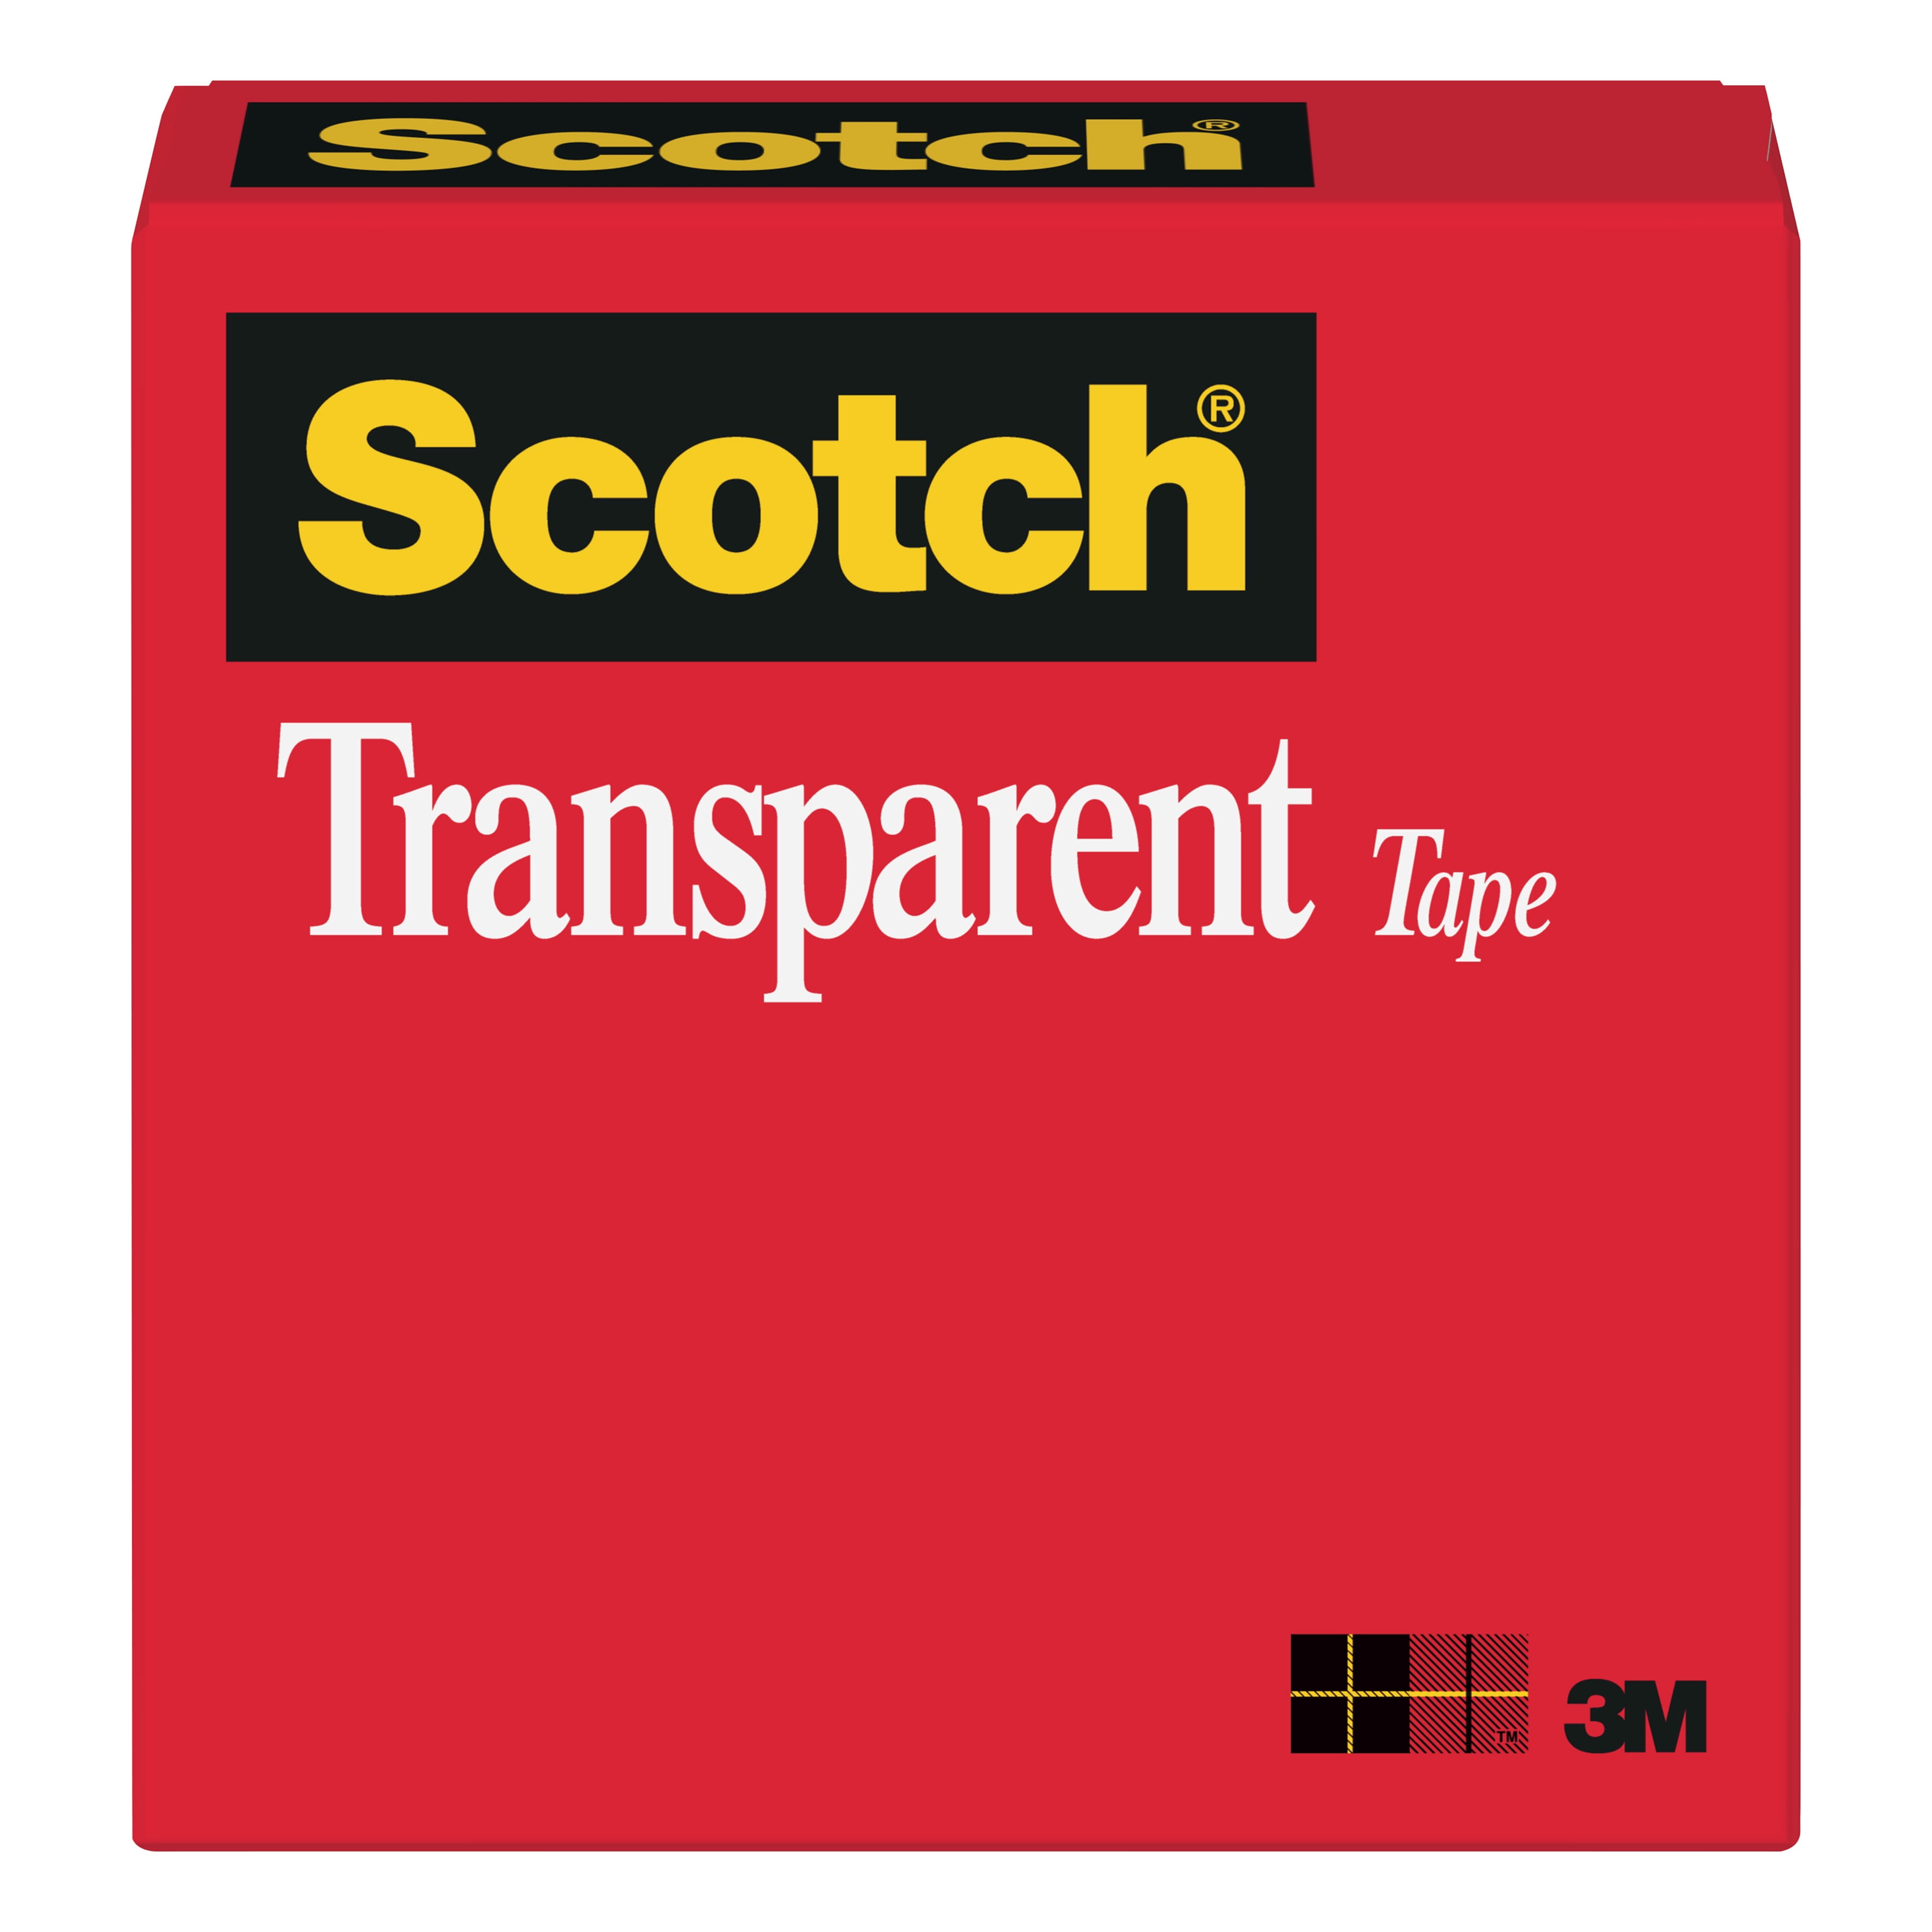 Premium Transparent Film Tape 600 1 1/2 in 72 yd - Pack of 1 600 Scotch C 